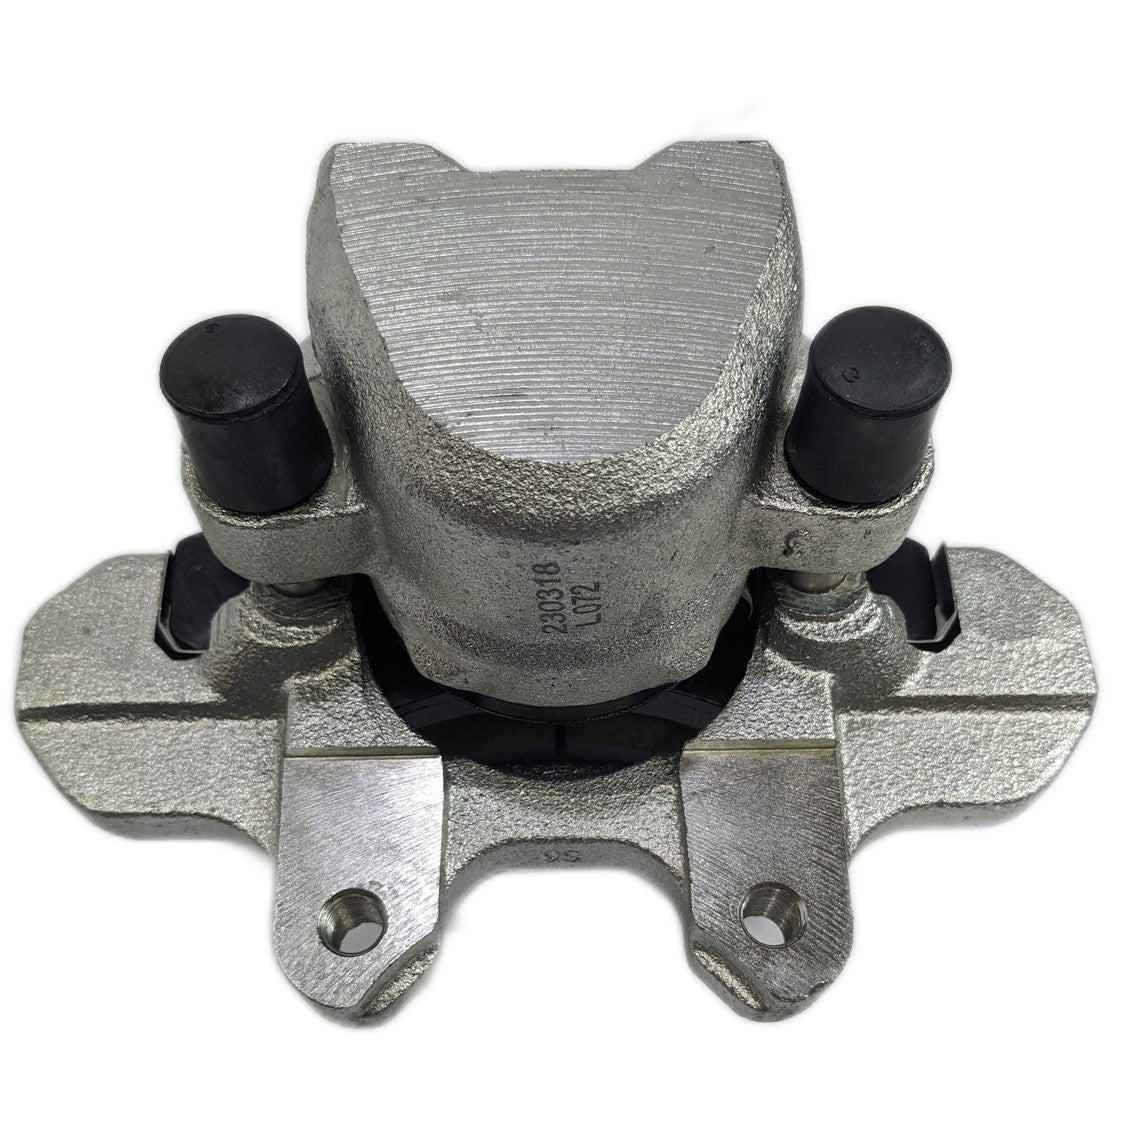 EZ Loader Brake Caliper with Pads for 12" Rotor (6 Lug Hub) 250-034106